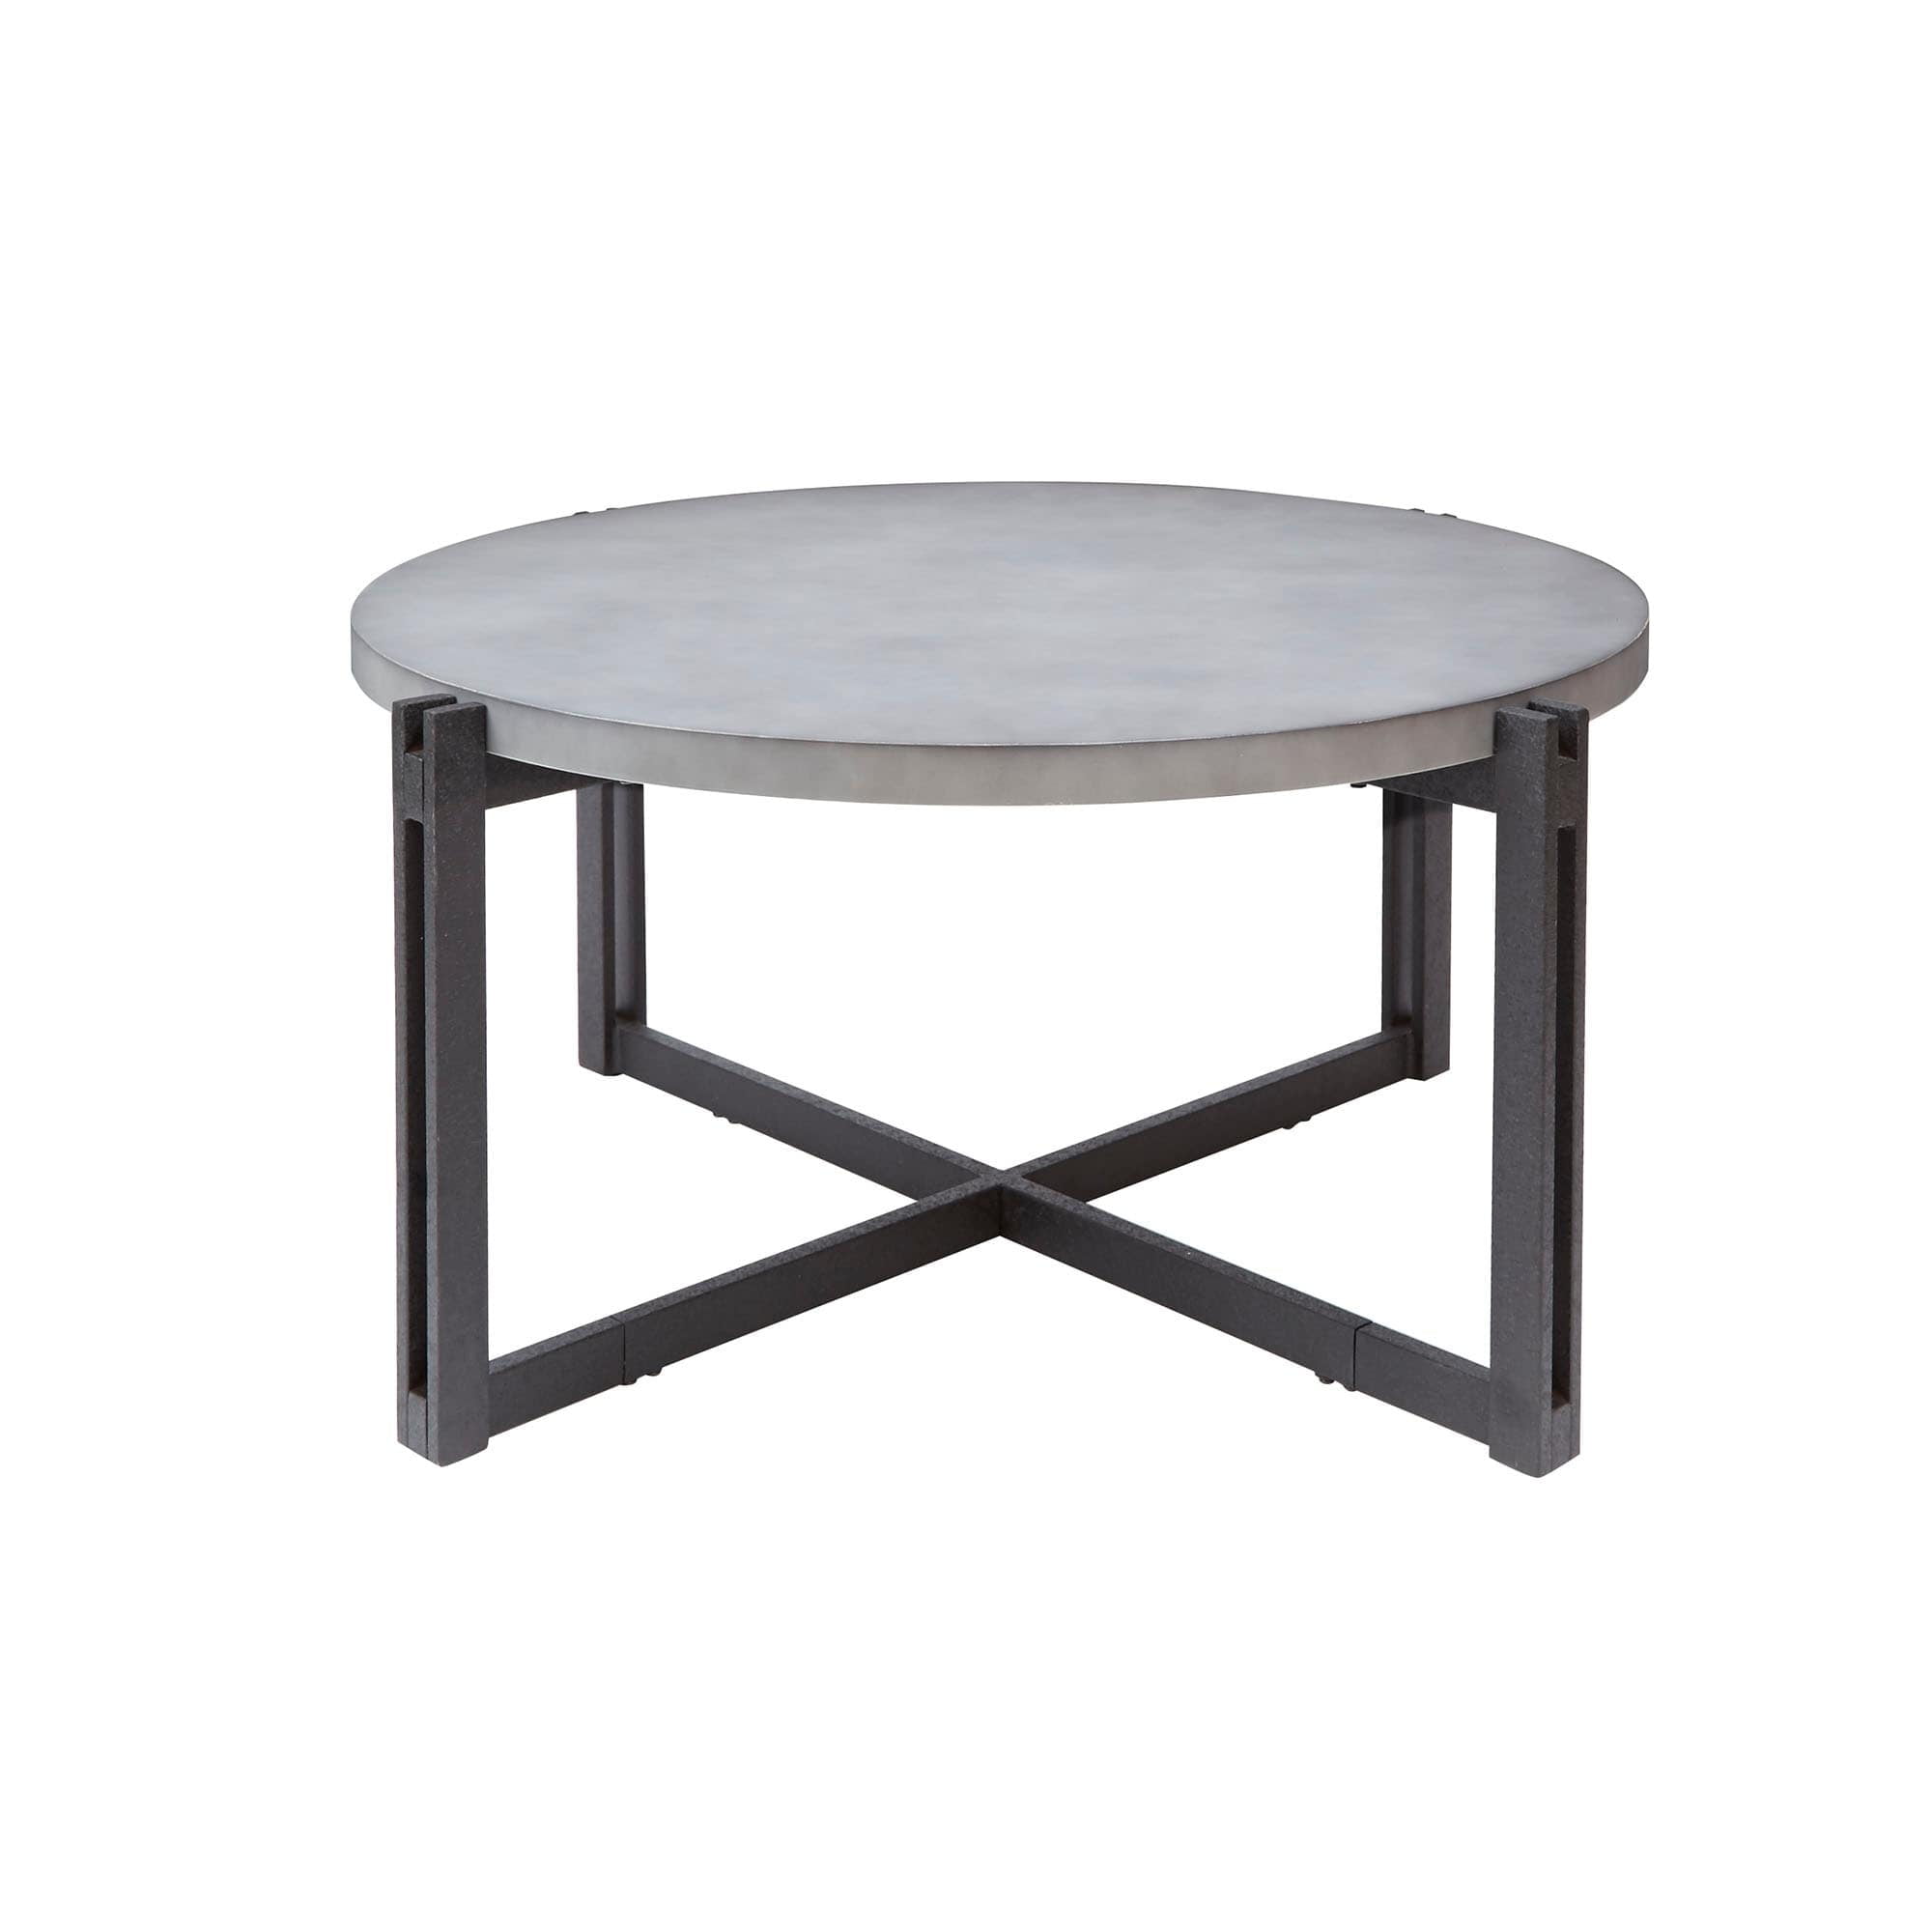 Dakota Coffee Table with Round Concrete Finish Top - Walmart.com